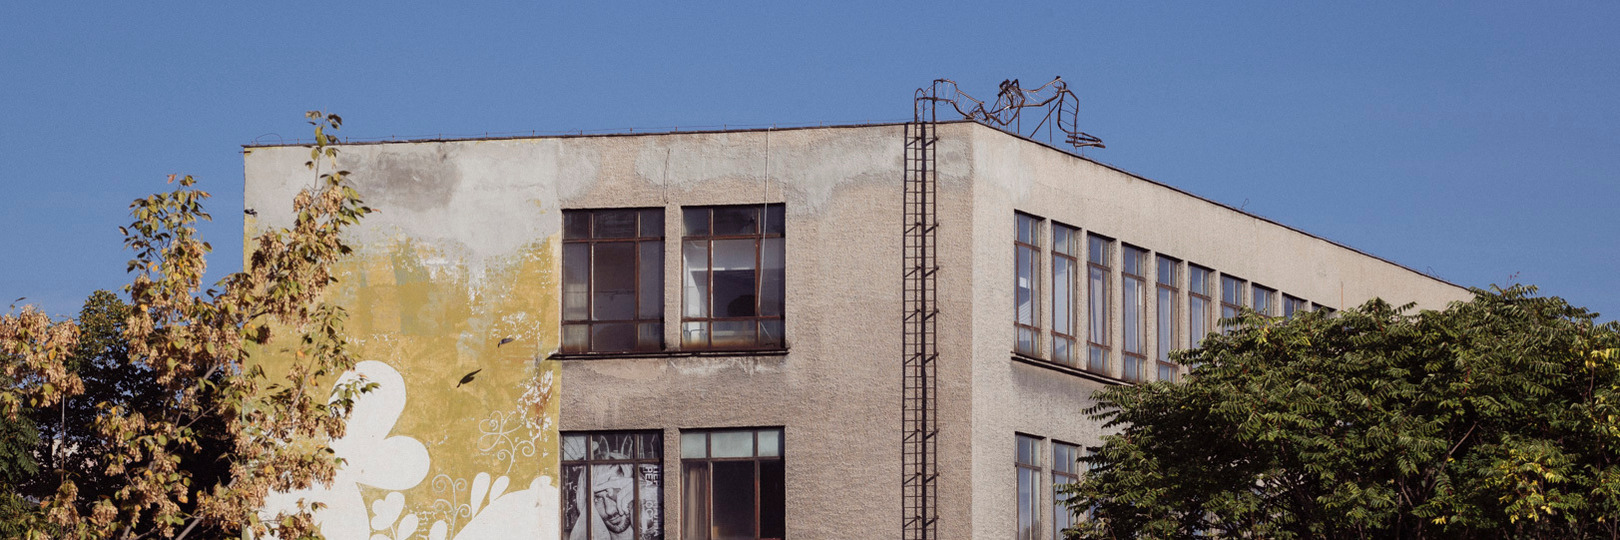 New European Bauhaus on the Danube